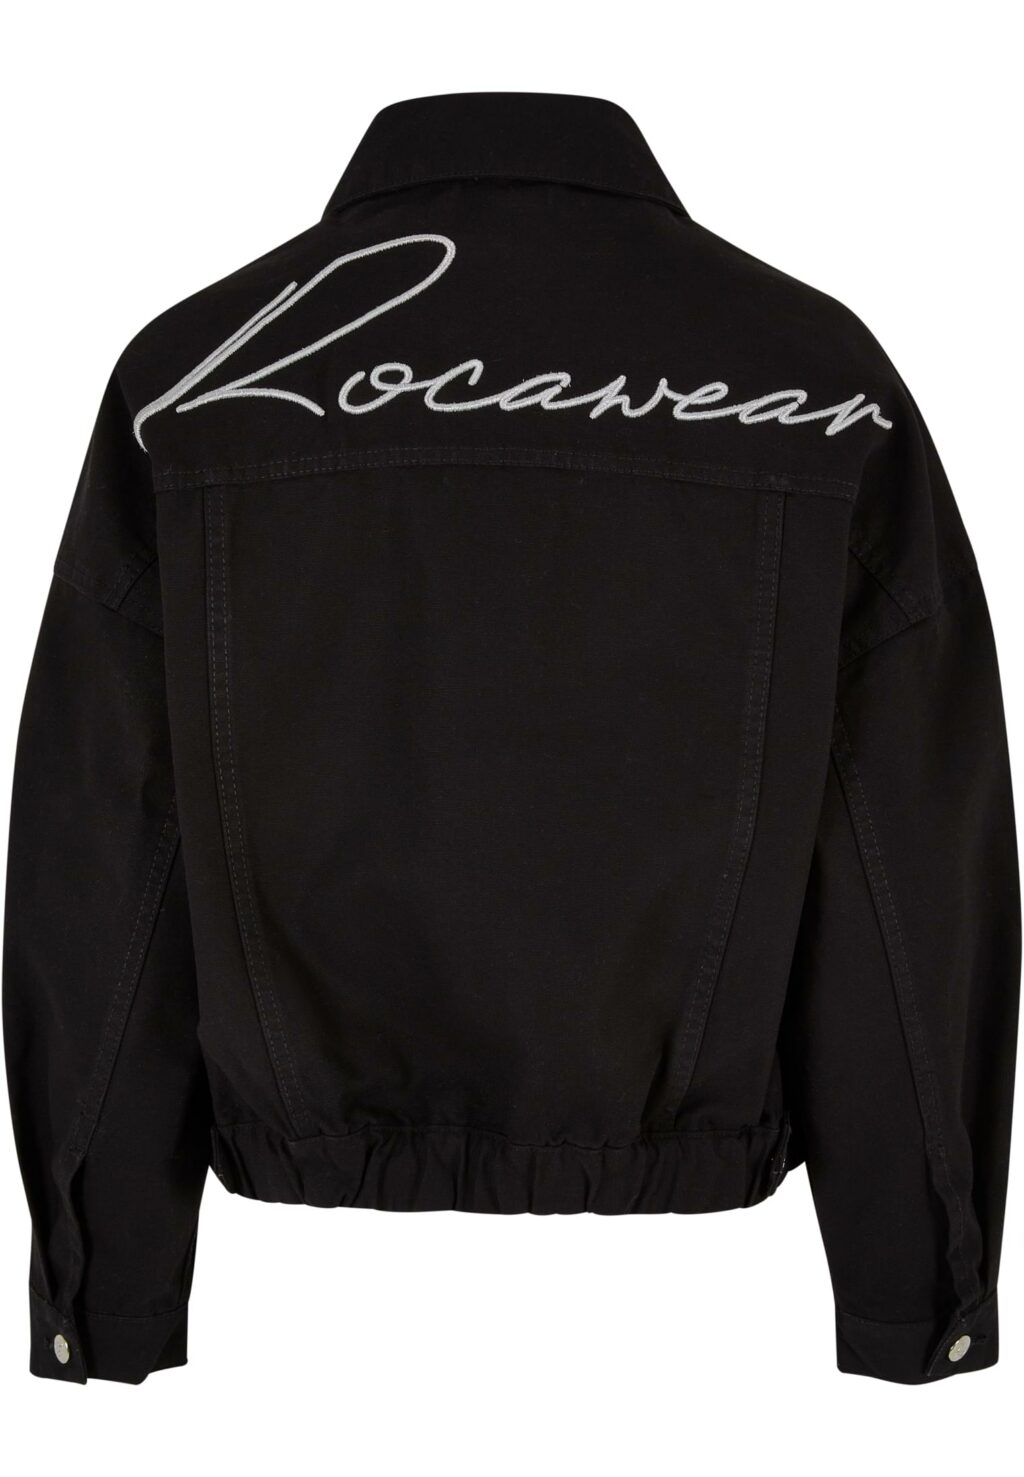 Rocawear Legacy Jacket black RWLJA001